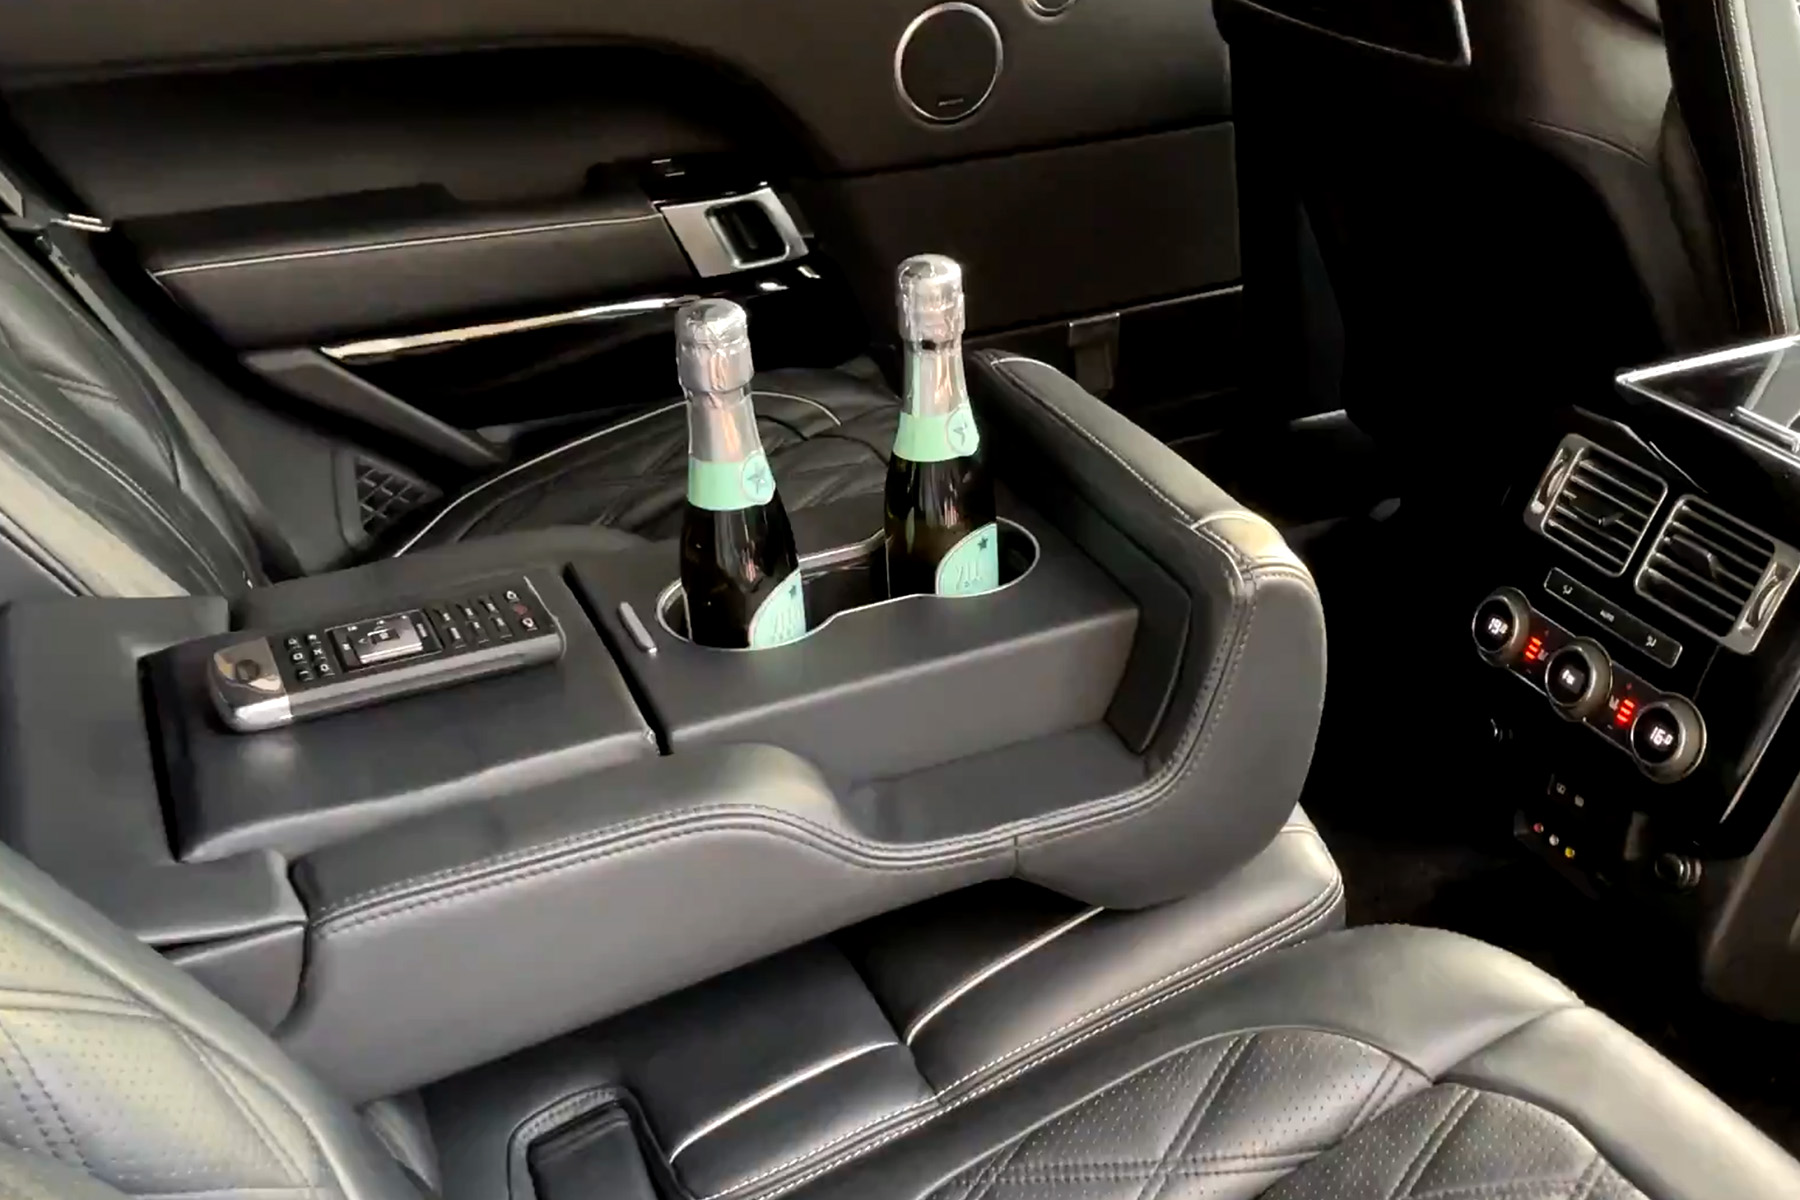 Range Rover Rear Seats - Luxe Scot